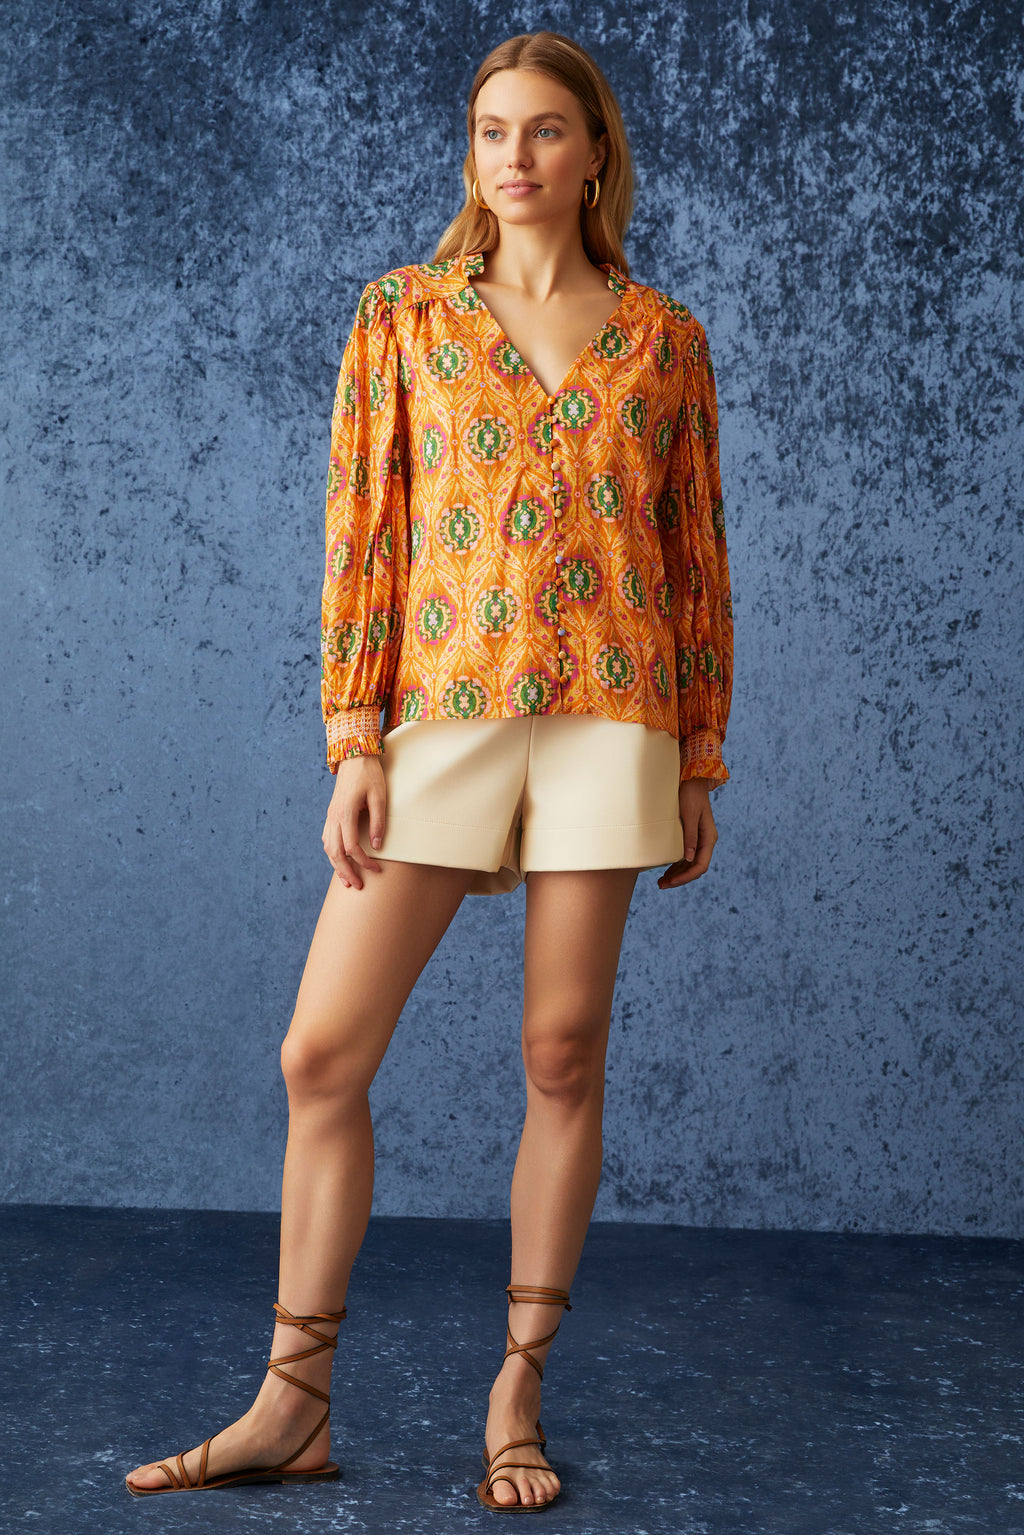 Long sleeve blouse in an orange geometric print